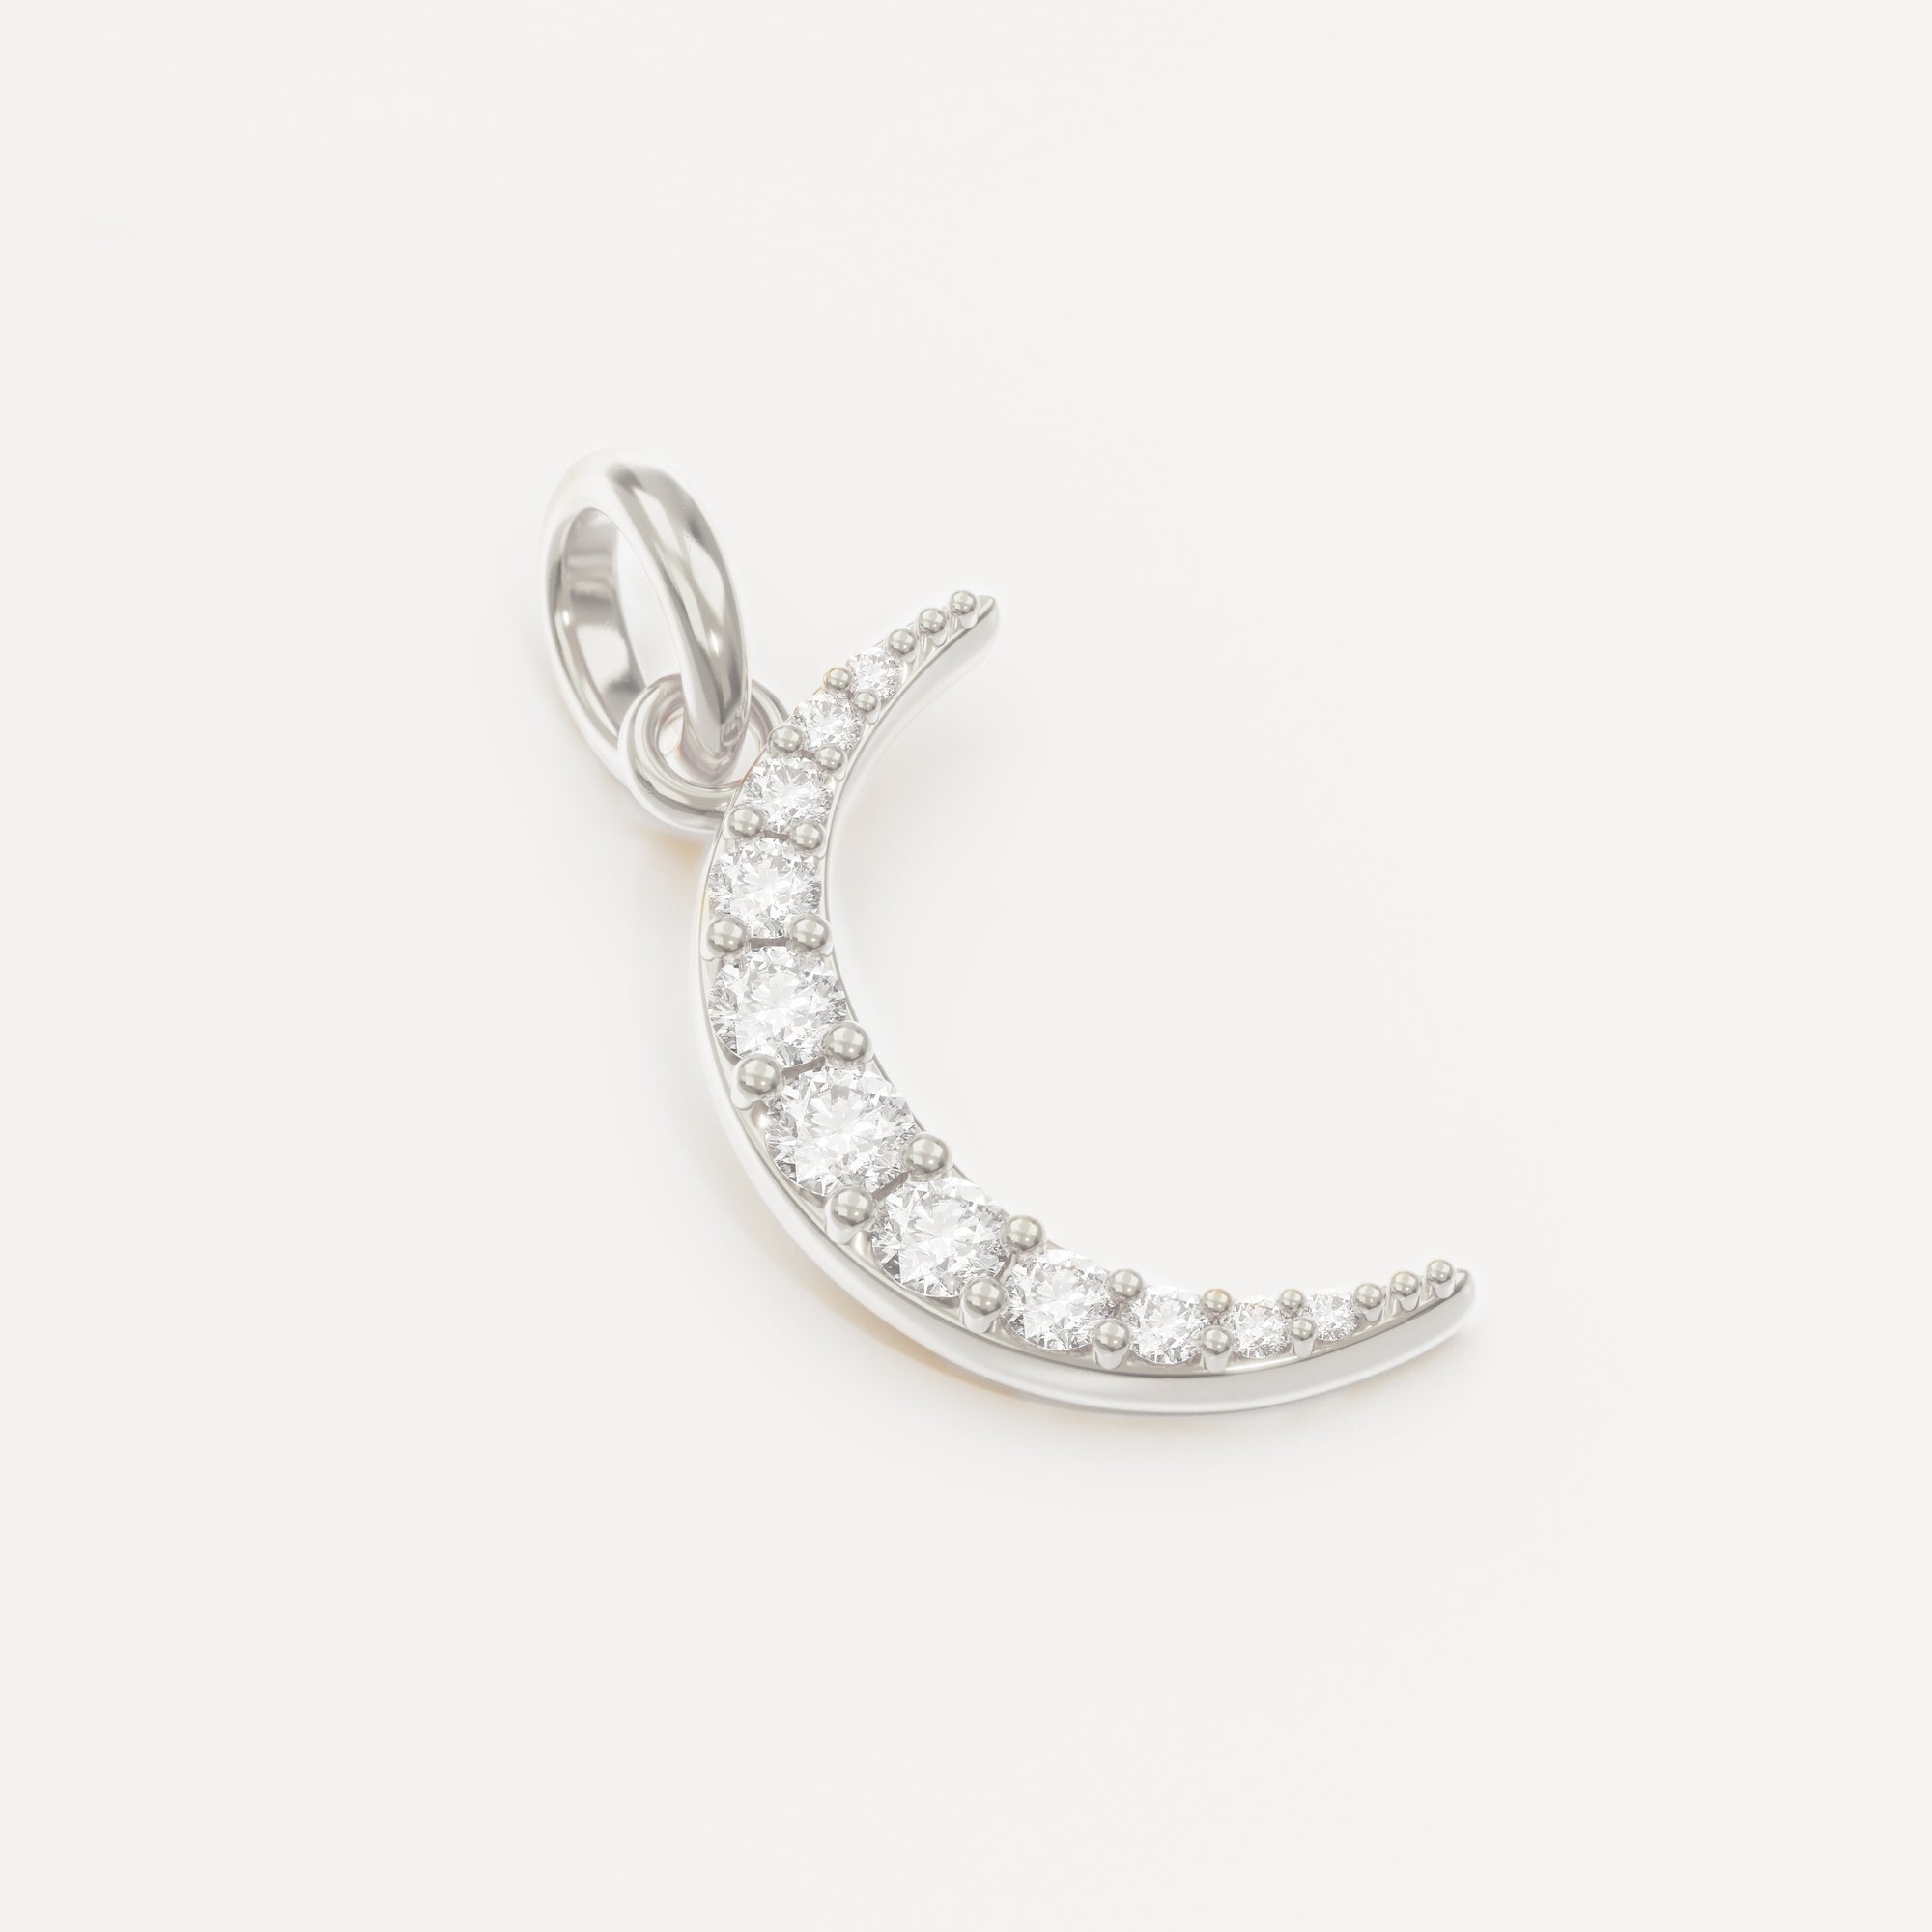 Unlock Your Intuition Annex Necklace Pendant - Silver